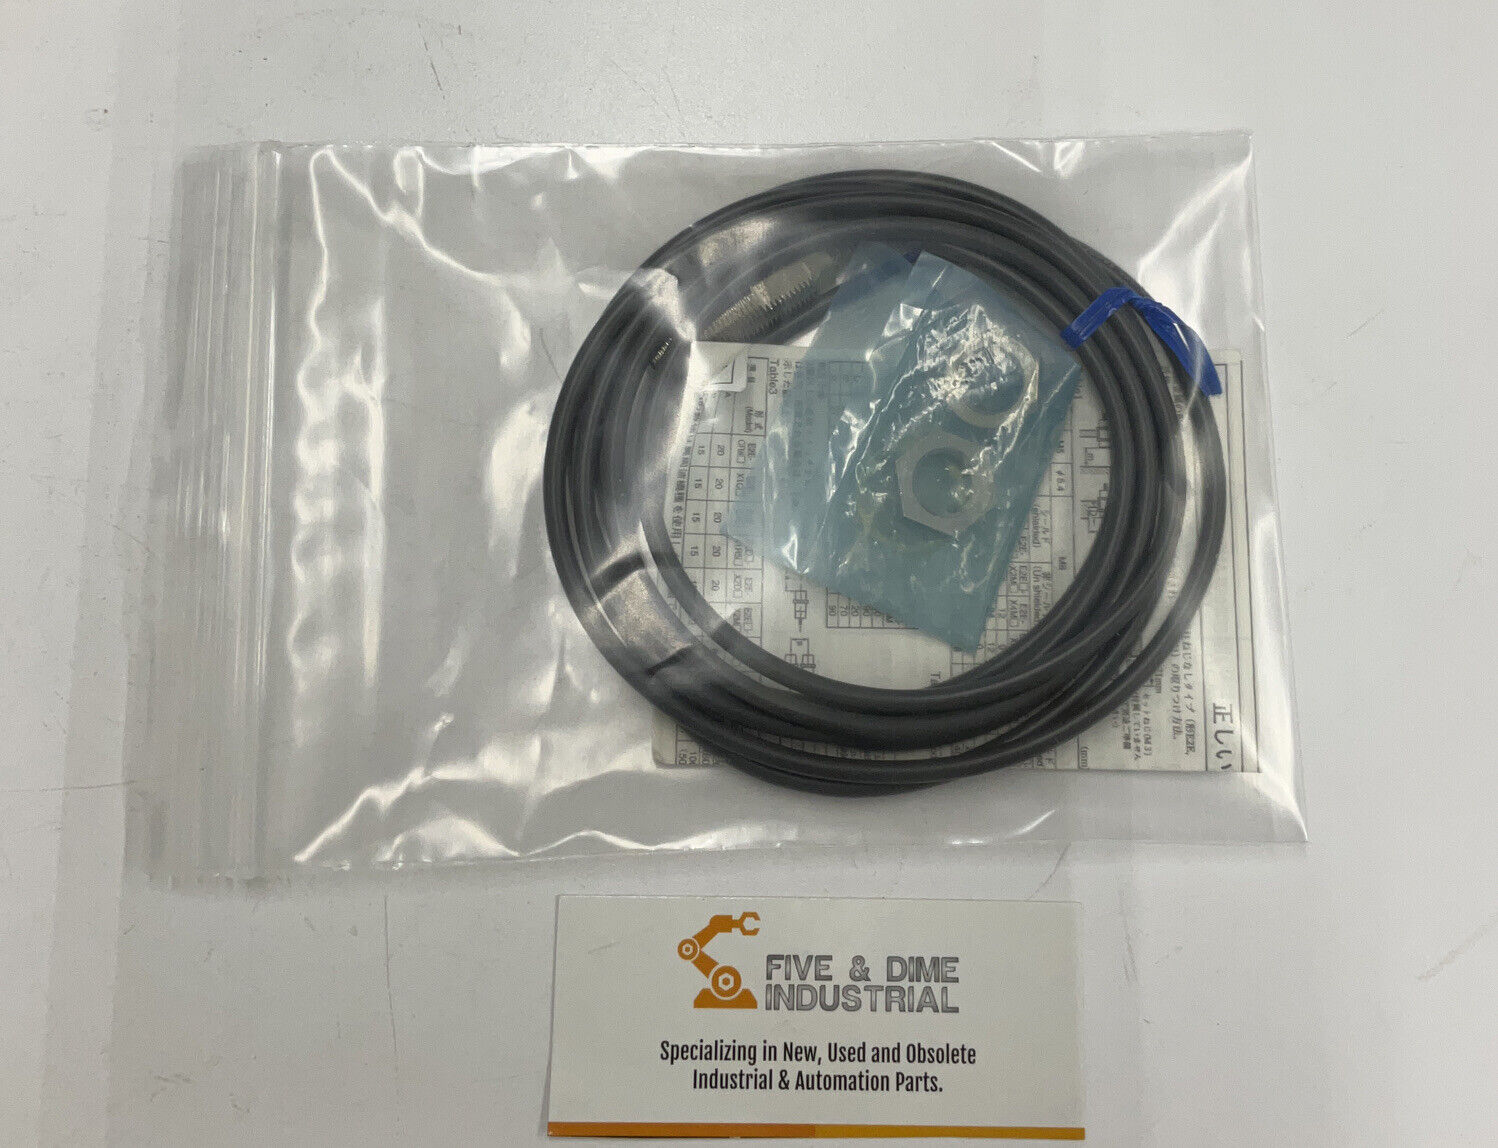 Omron E2E-X2E2 Proximity Switch / Sensor 12-24VDC (BL192)